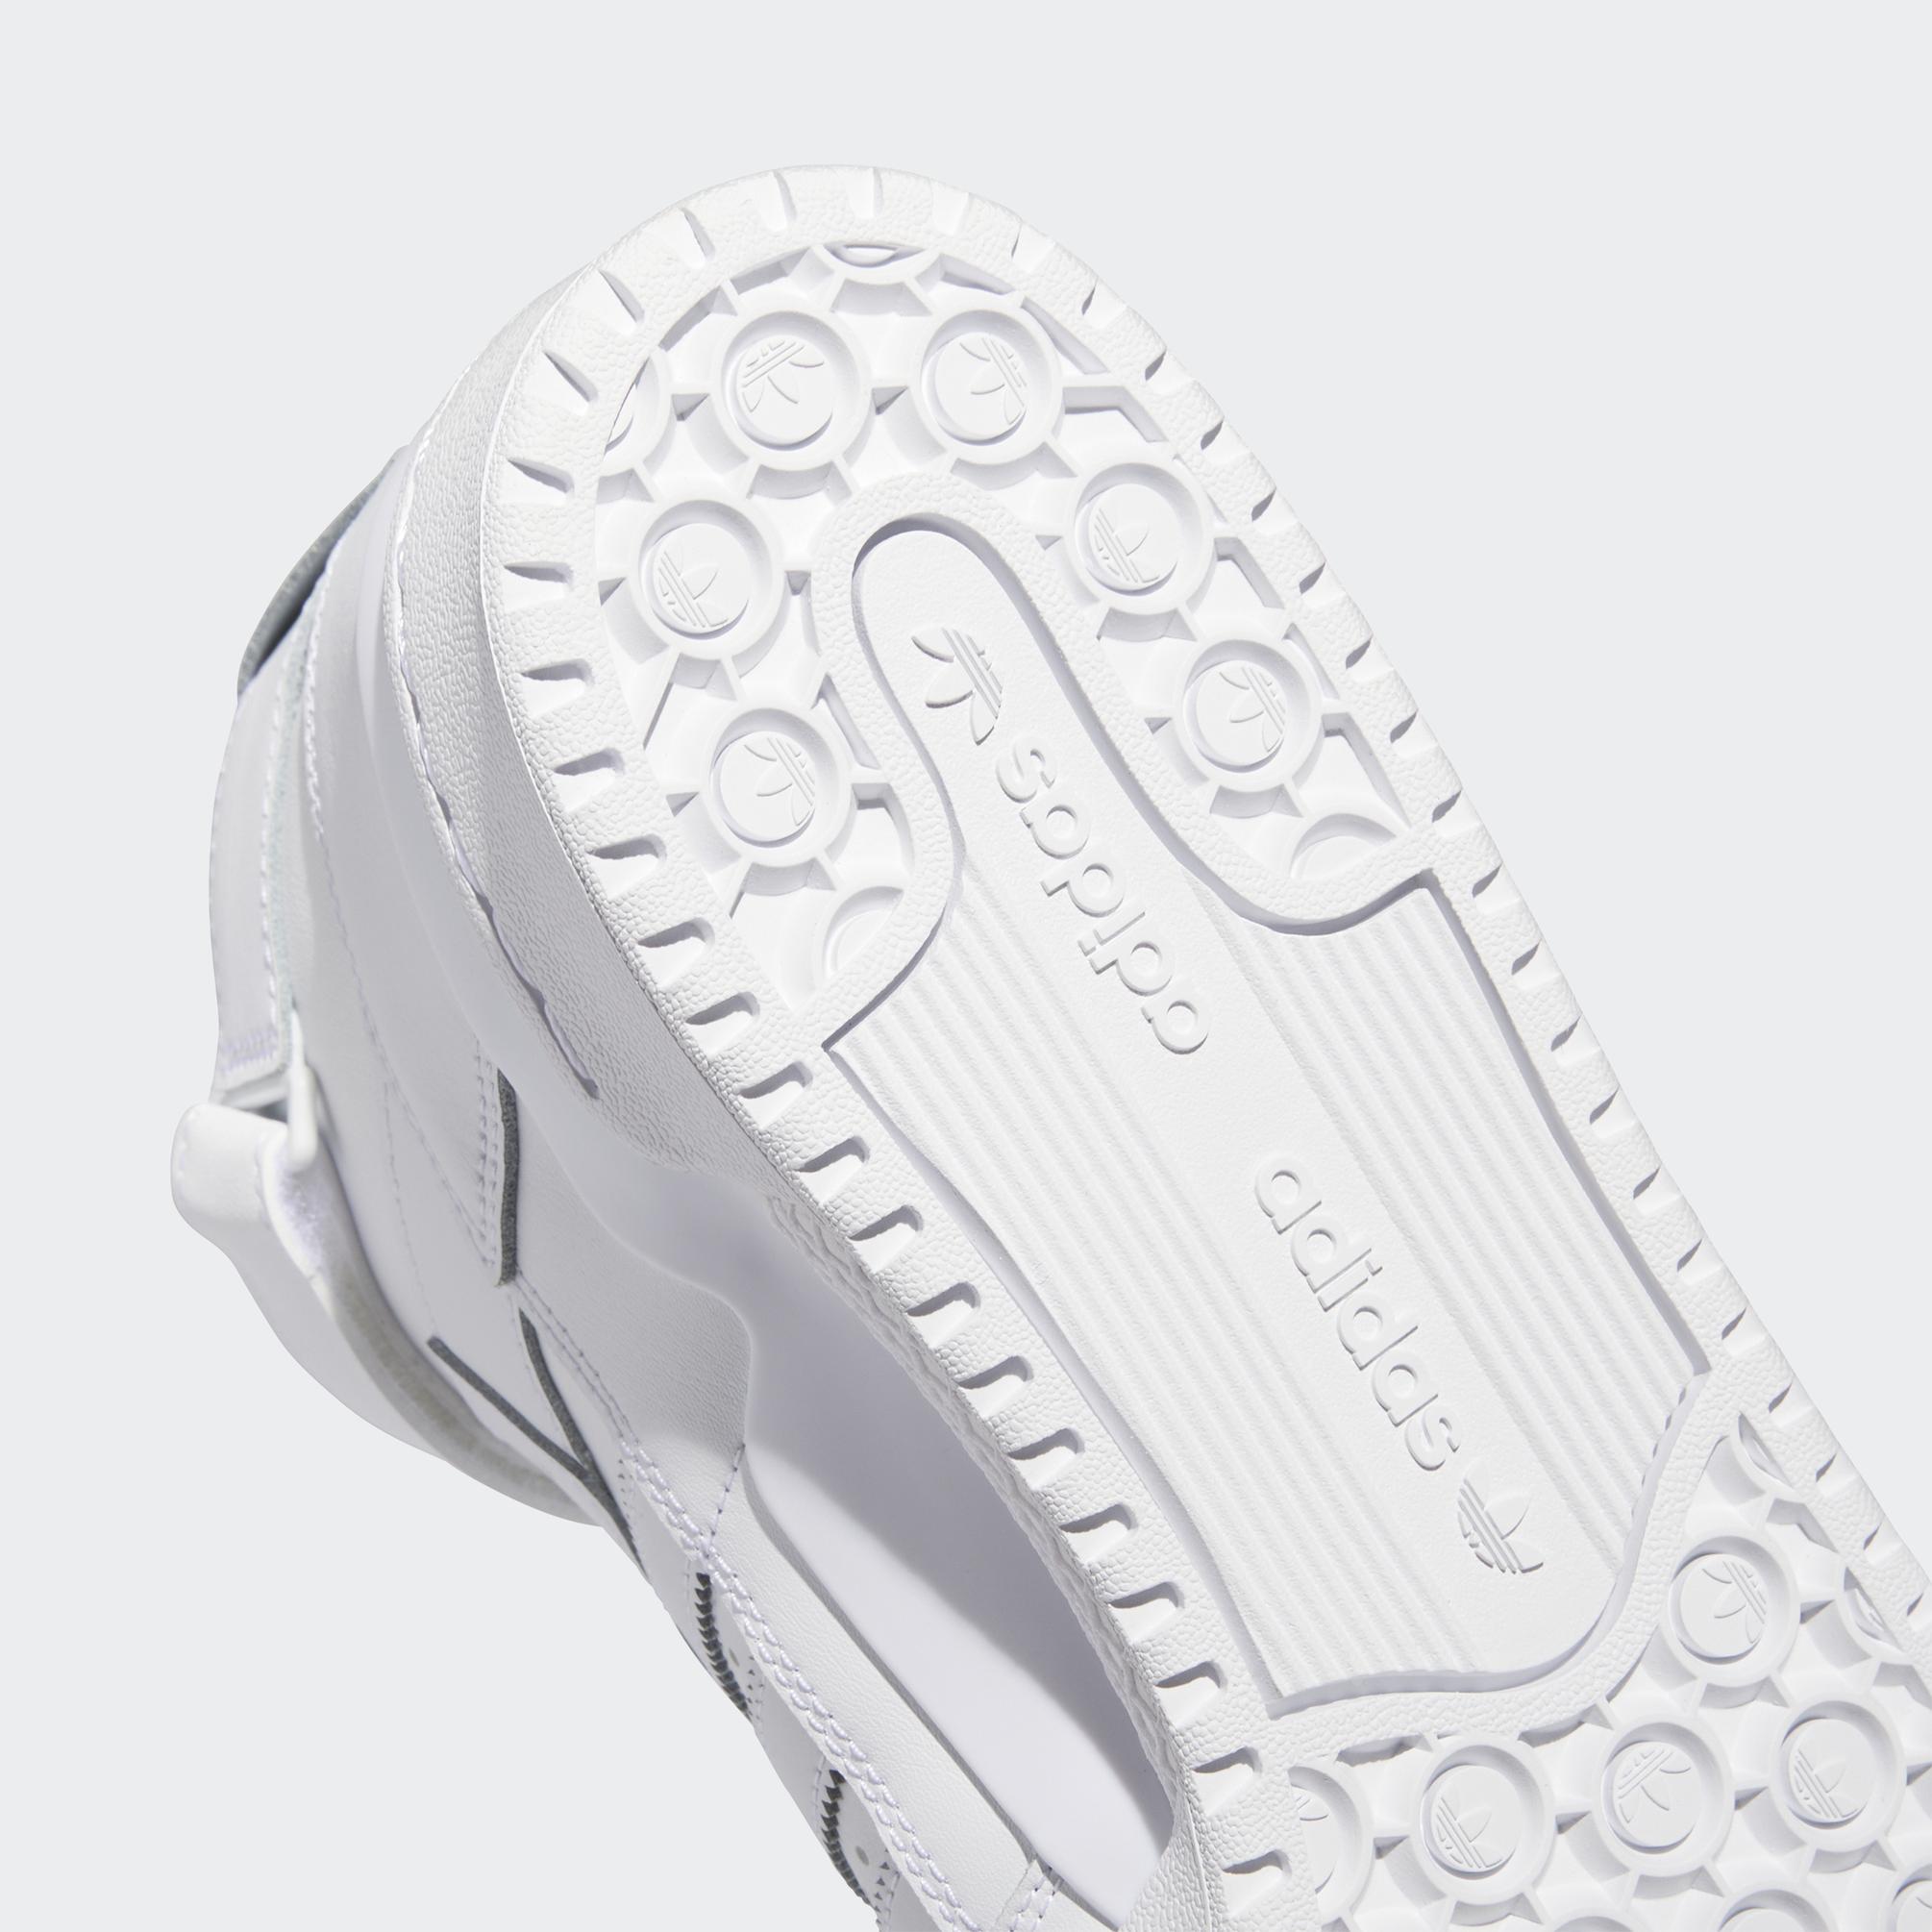  adidas Originals Forum Mid Kadın Beyaz Spor Ayakkabı